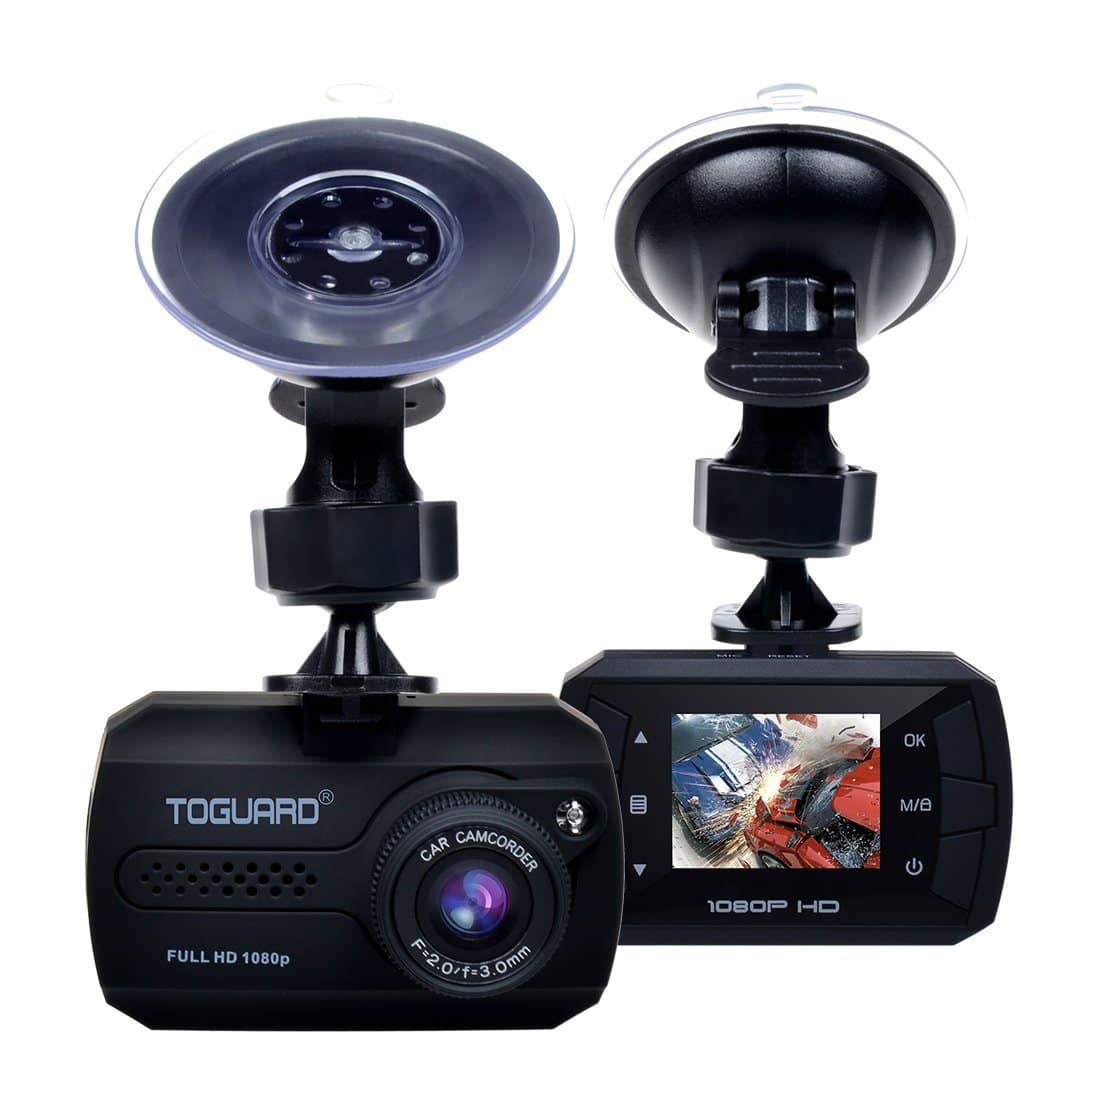 Caméra Embarquée QHD 1440p, Caméra Voiture avec Micro et Port mini